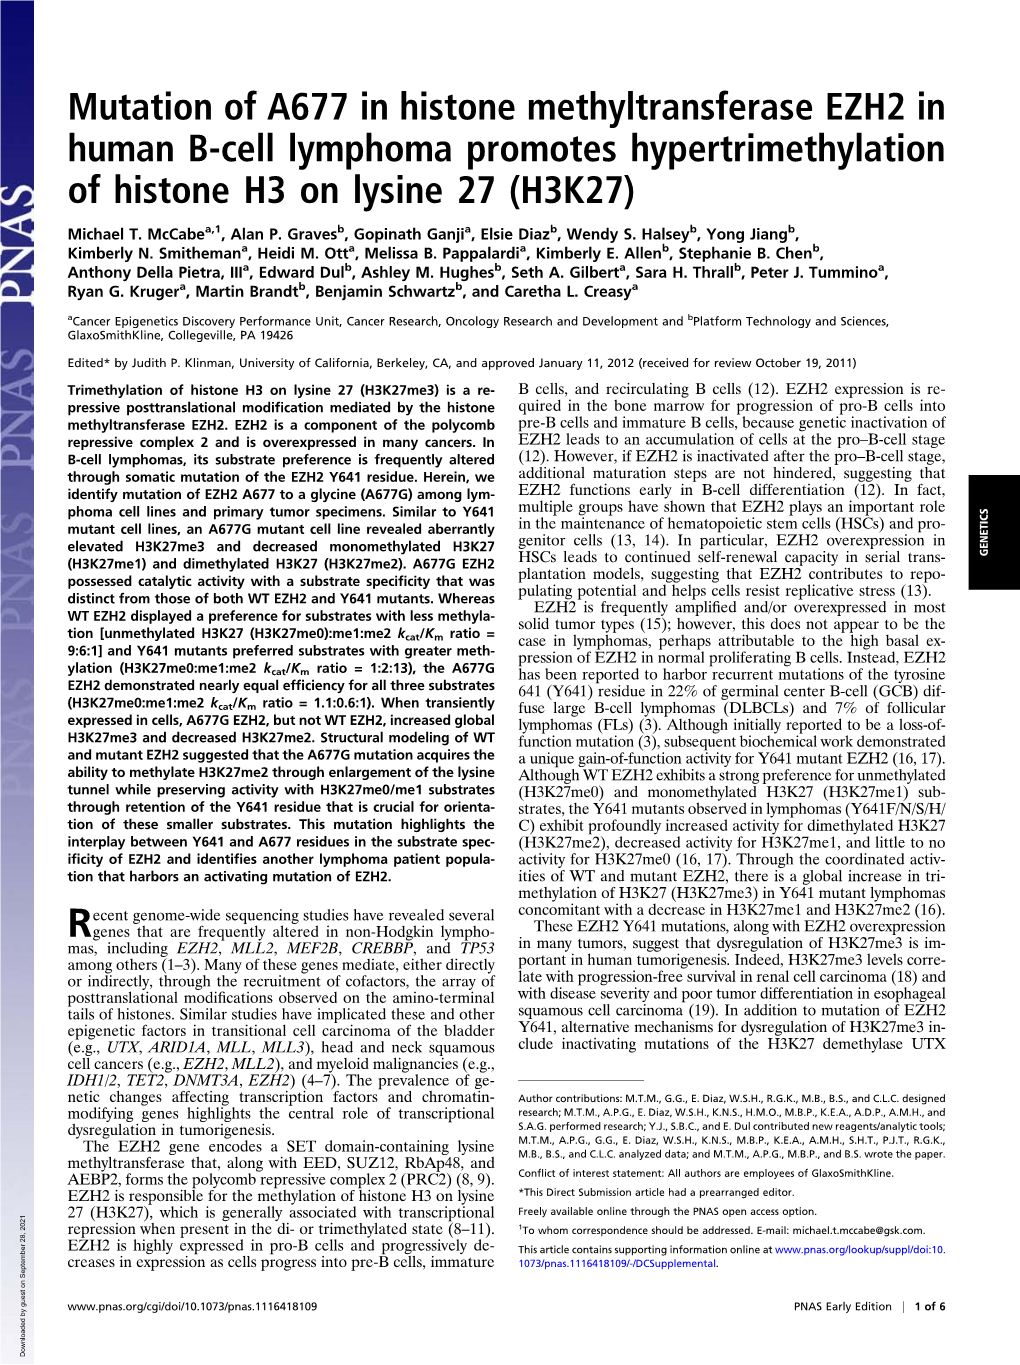 Mutation of A677 in Histone Methyltransferase EZH2 in Human B-Cell Lymphoma Promotes Hypertrimethylation of Histone H3 on Lysine 27 (H3K27)